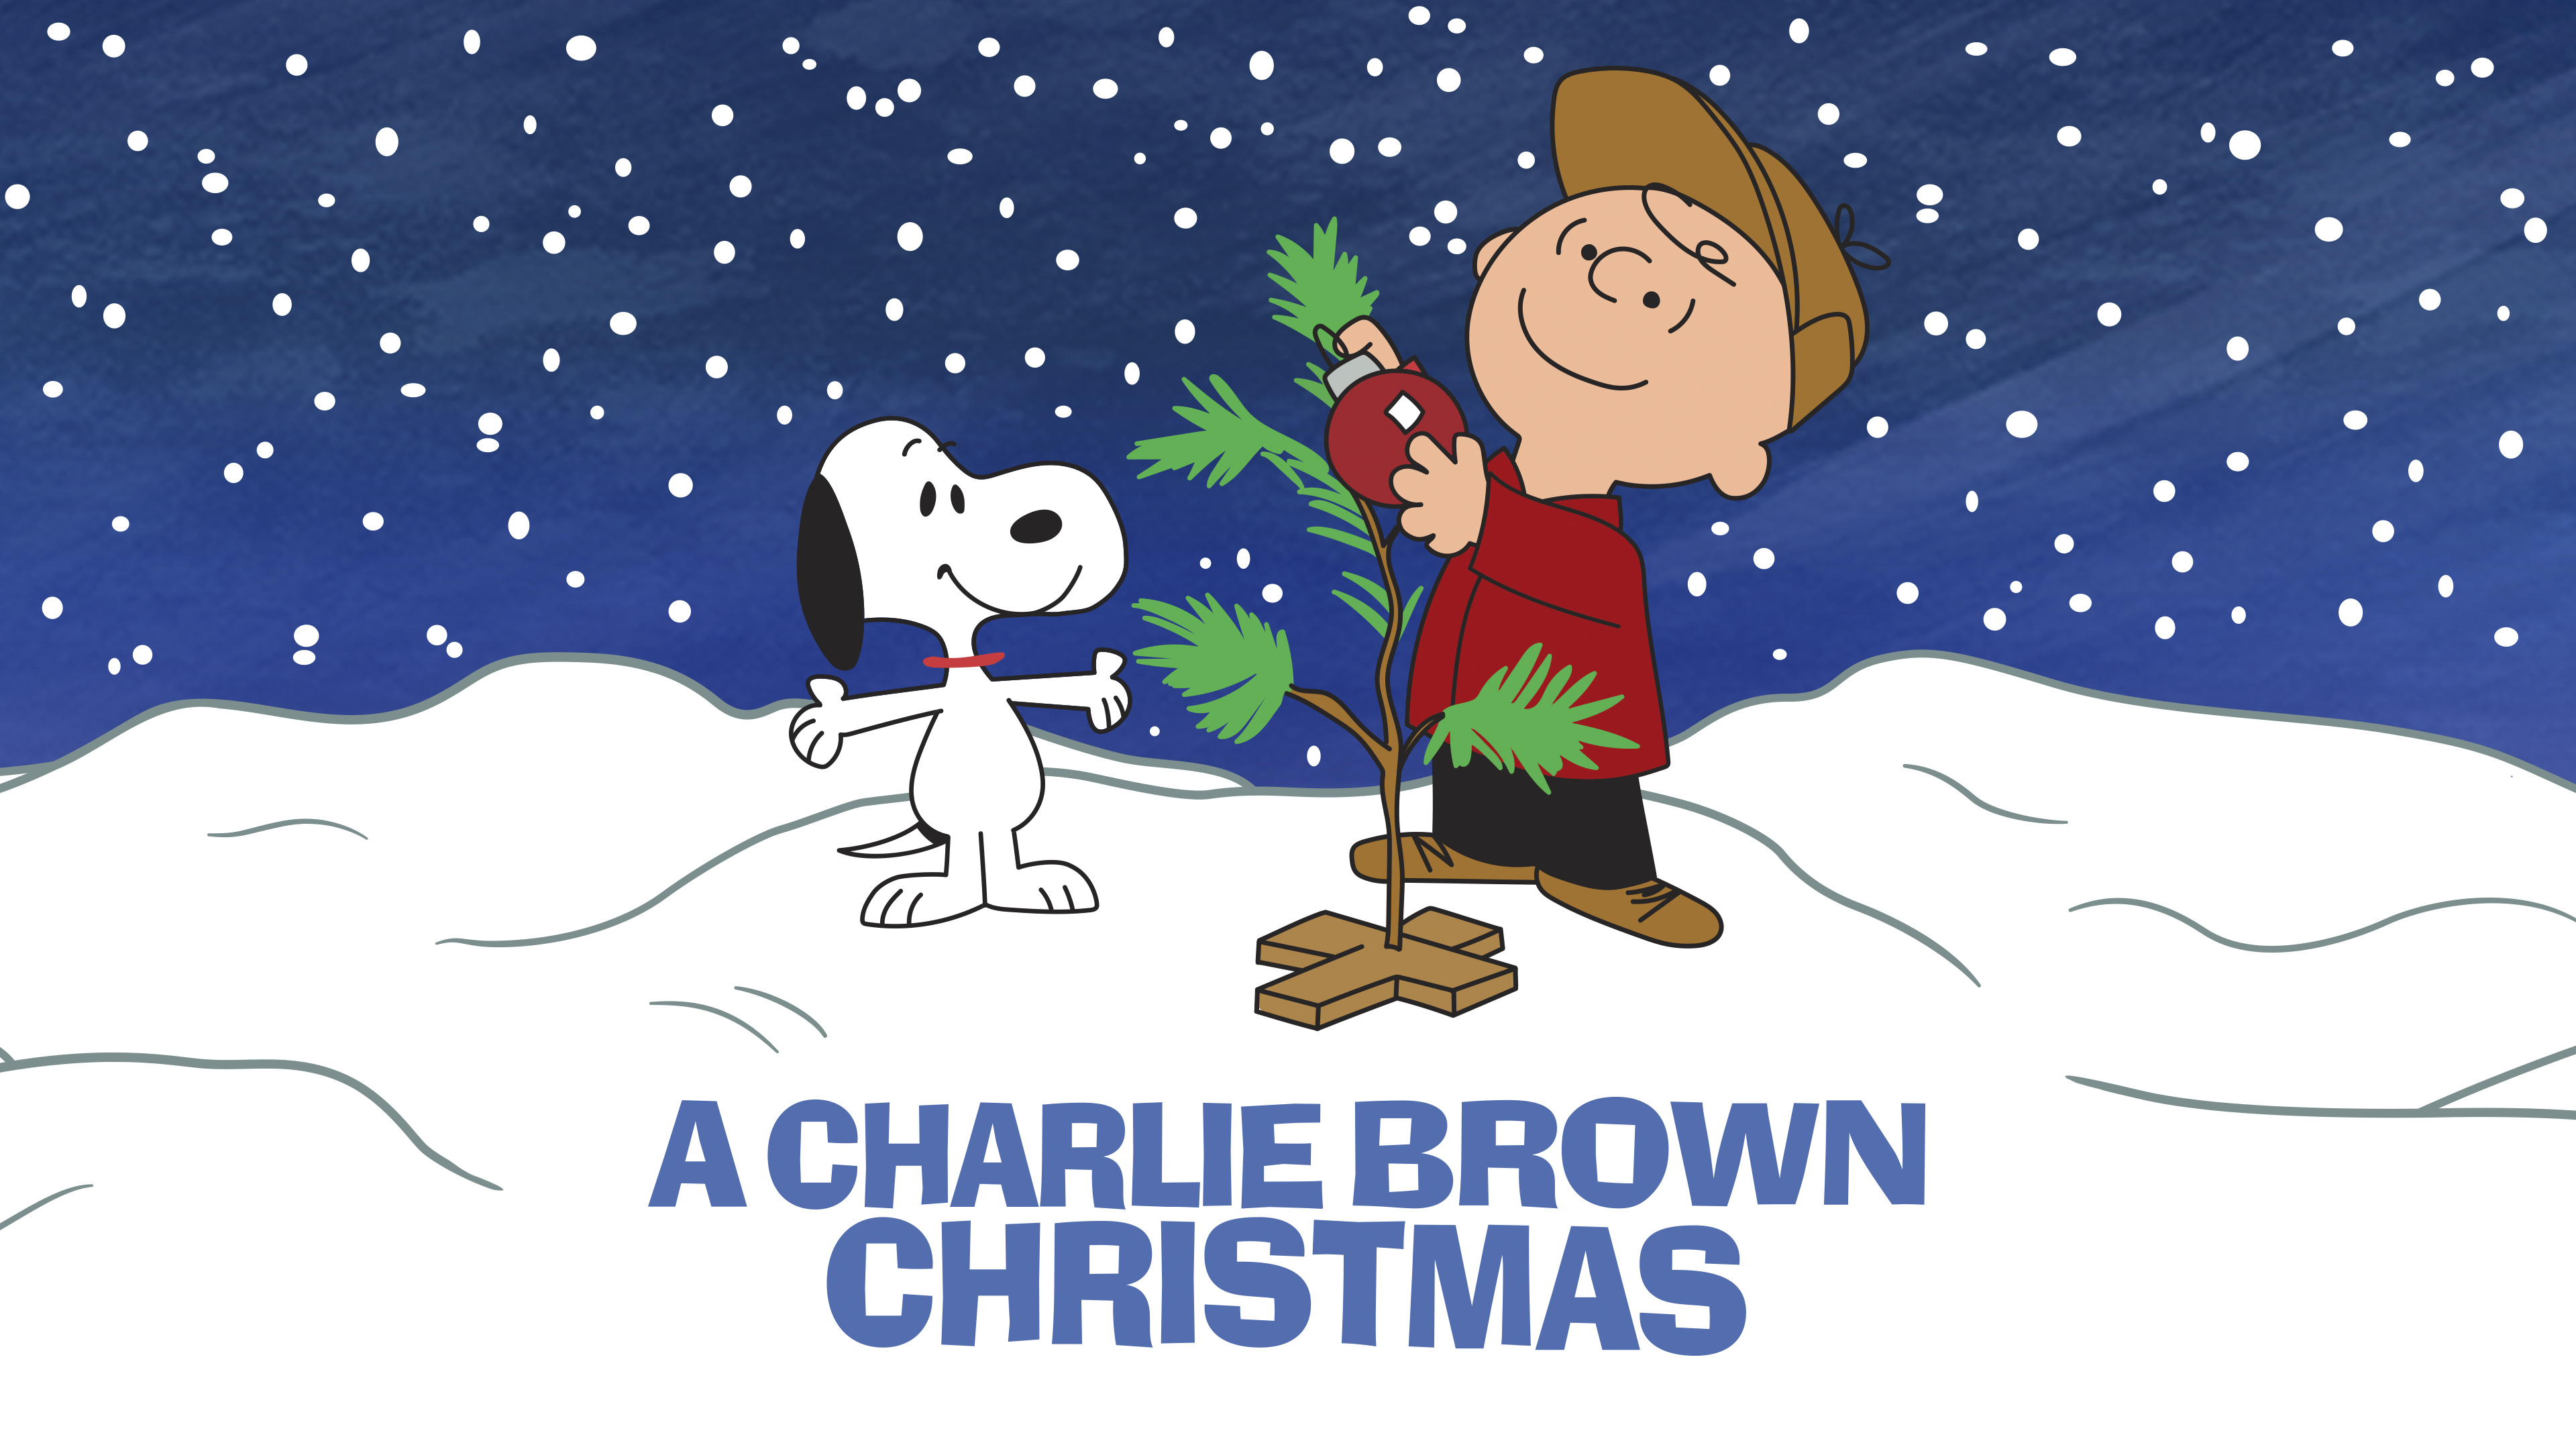 Houston Astros Snoopy Dabbing The Peanuts American Christmas